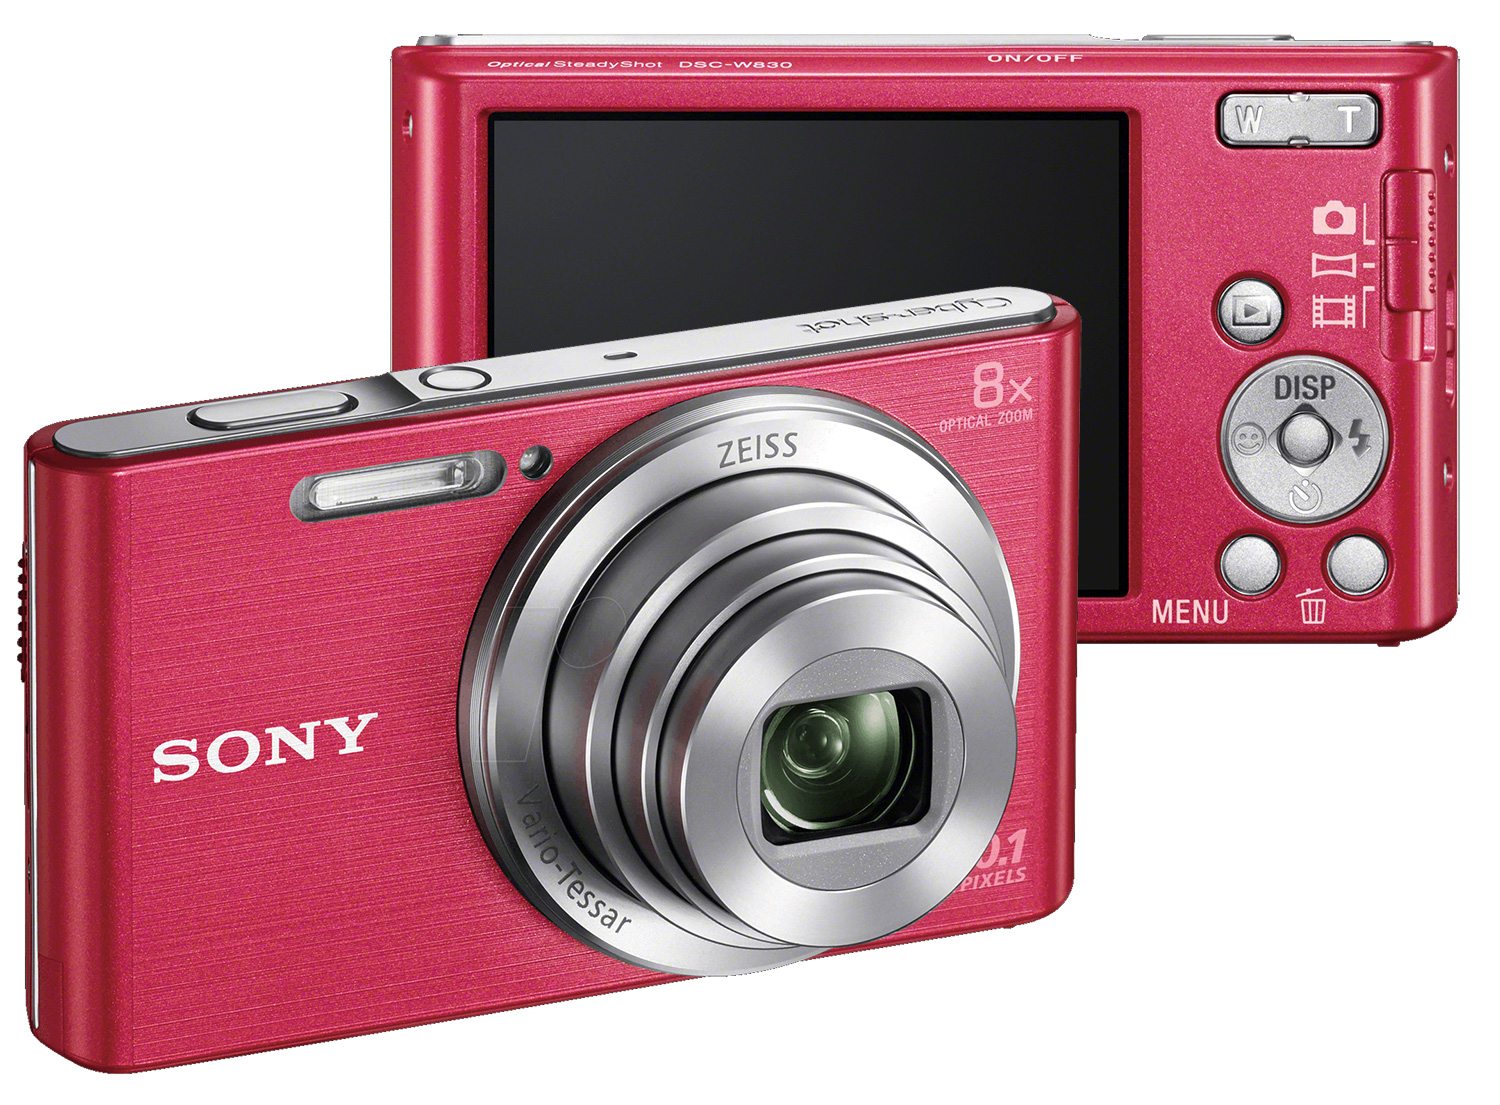 Sony DSC-W830 Cyber-shot Digital Camera (Silver) at Hunts Photo & Video